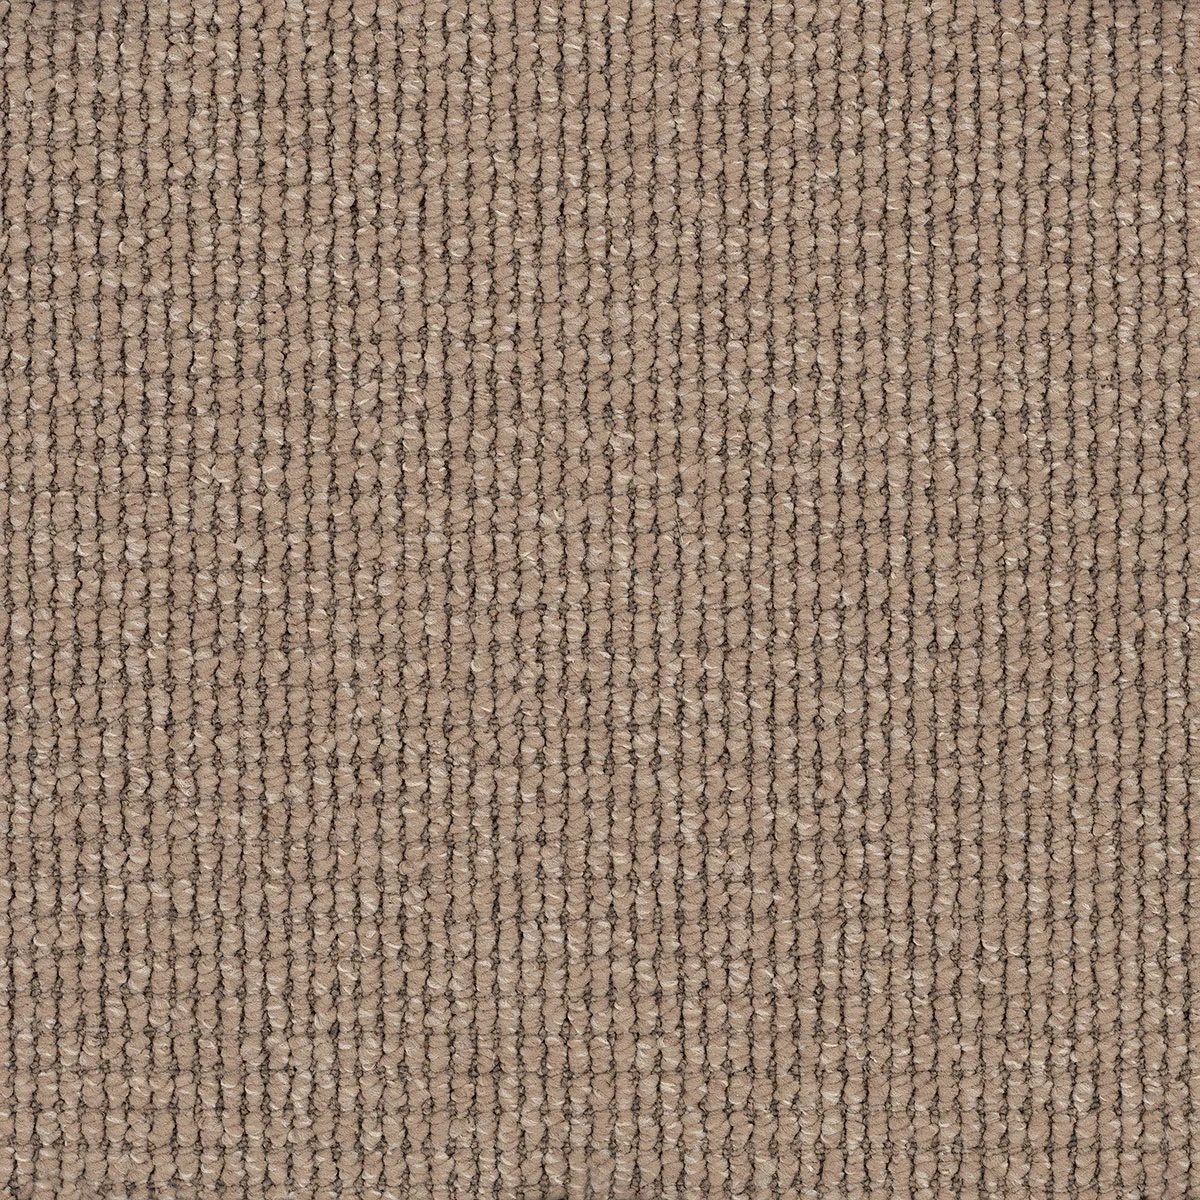 Frontier Carpet range in Tundra colour